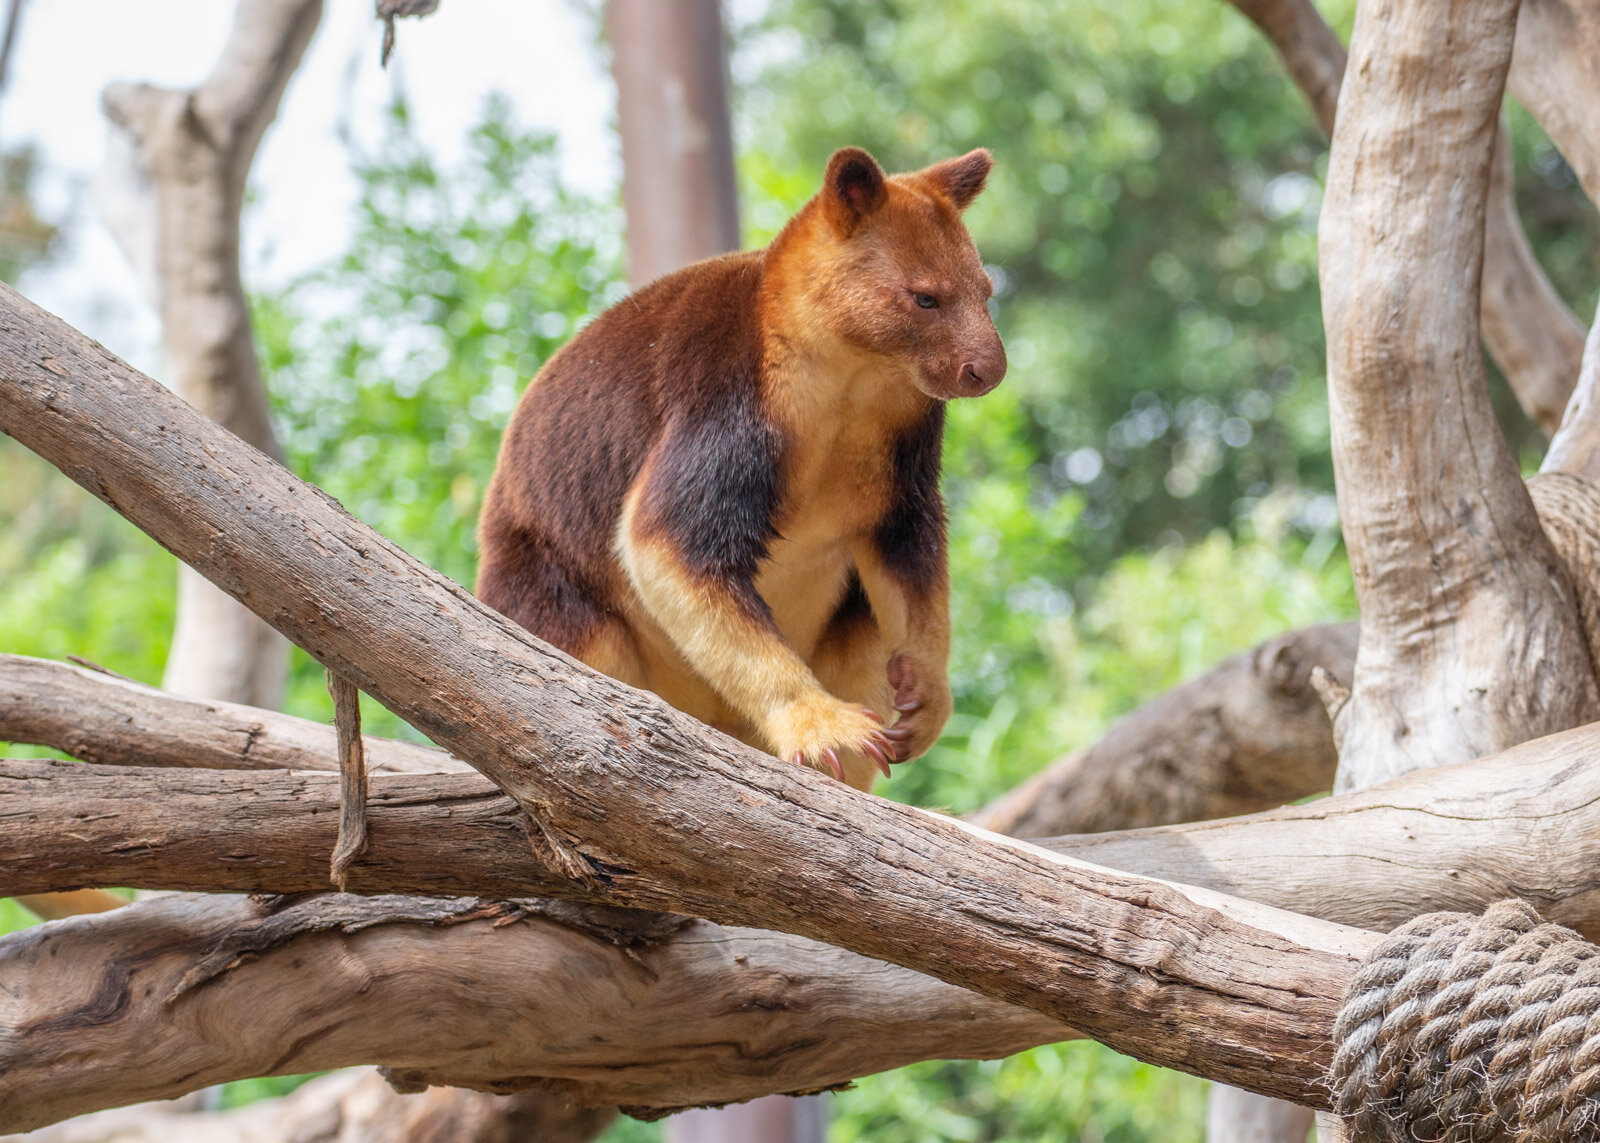 Drop bears target tourists, study says - Australian Geographic